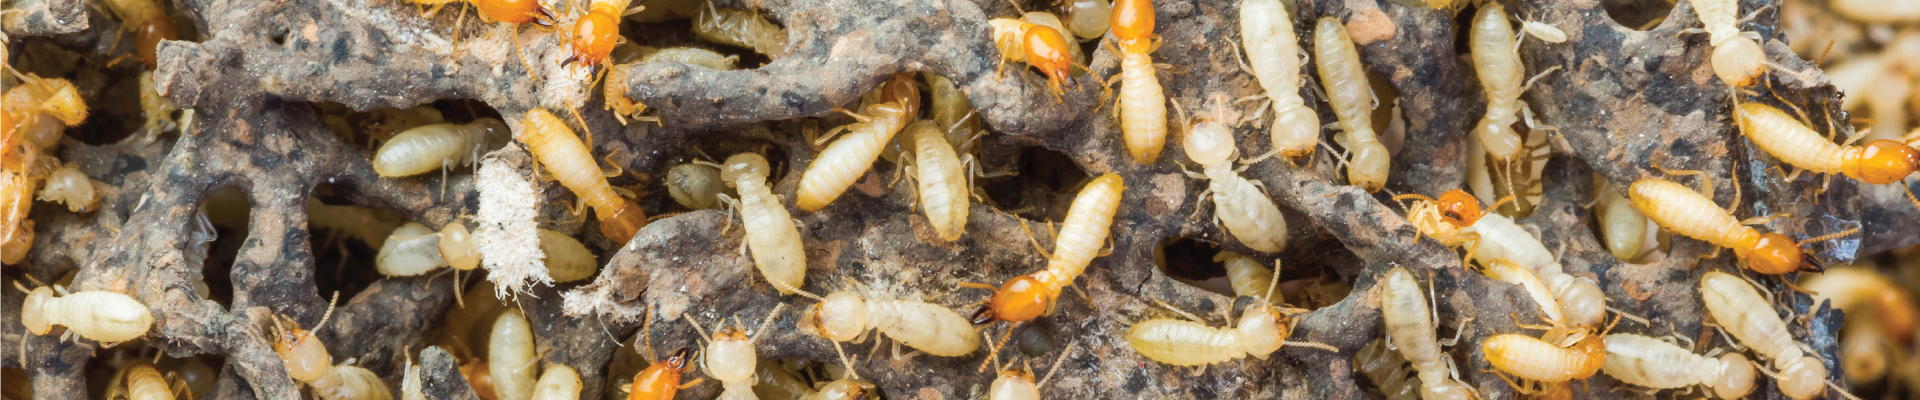 Termite Exterminators NJ MD PA DE